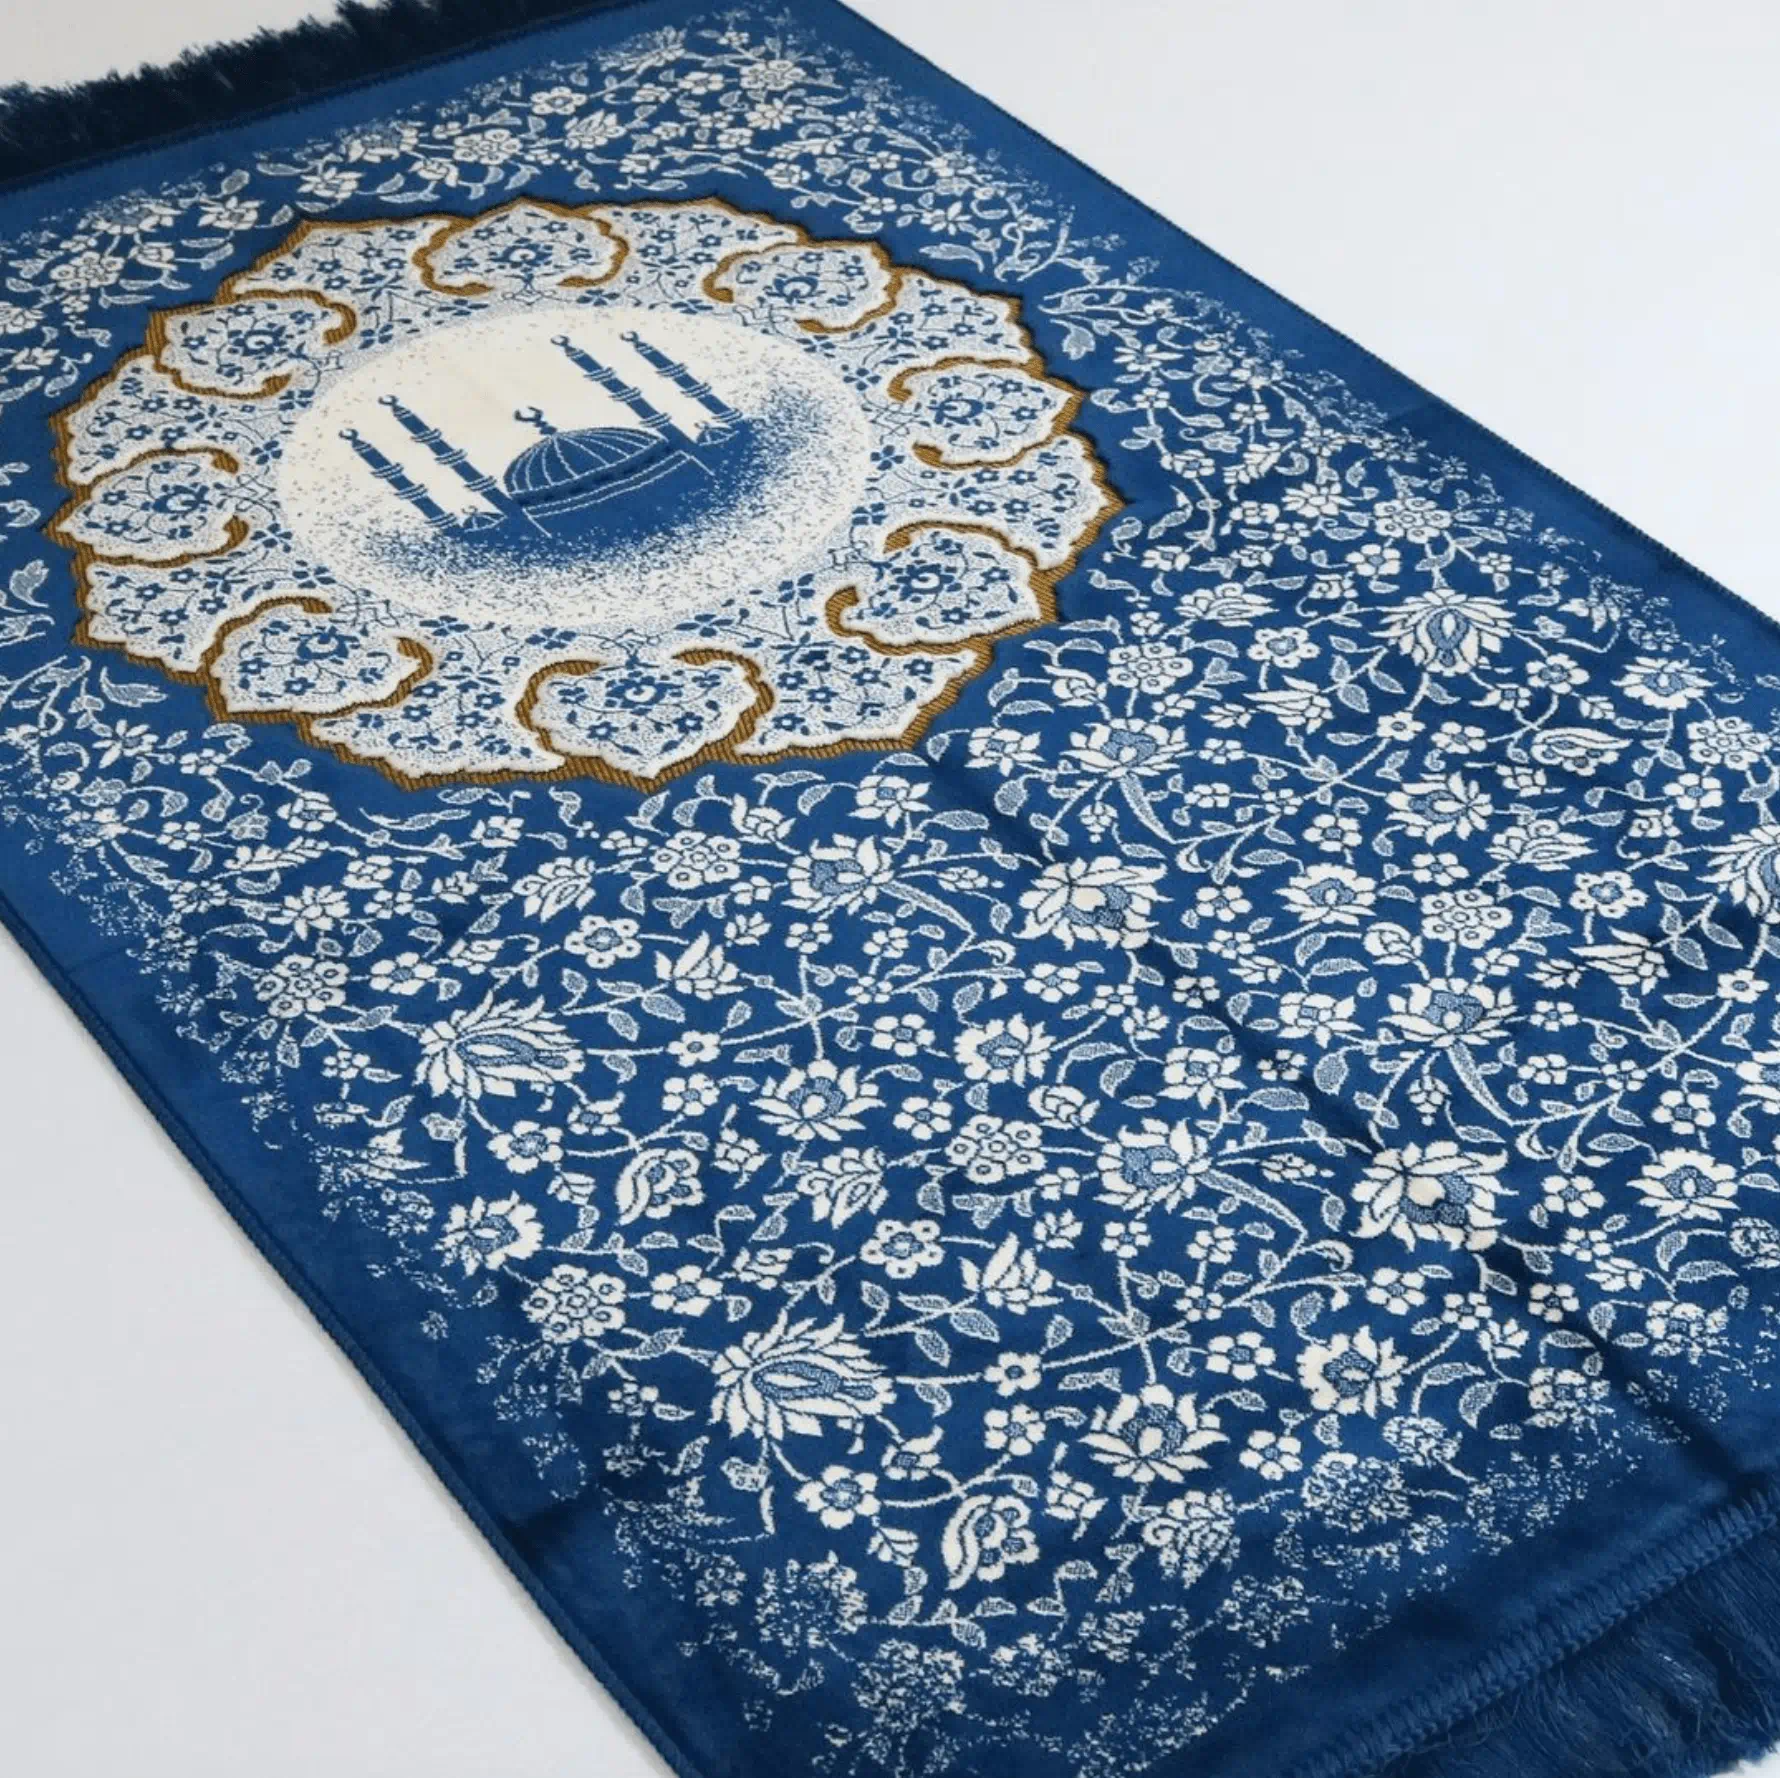 INSMA Turkish Islamic Muslim Prayer Rug Carpet Mat Tassel Tapestry Praying Mat 